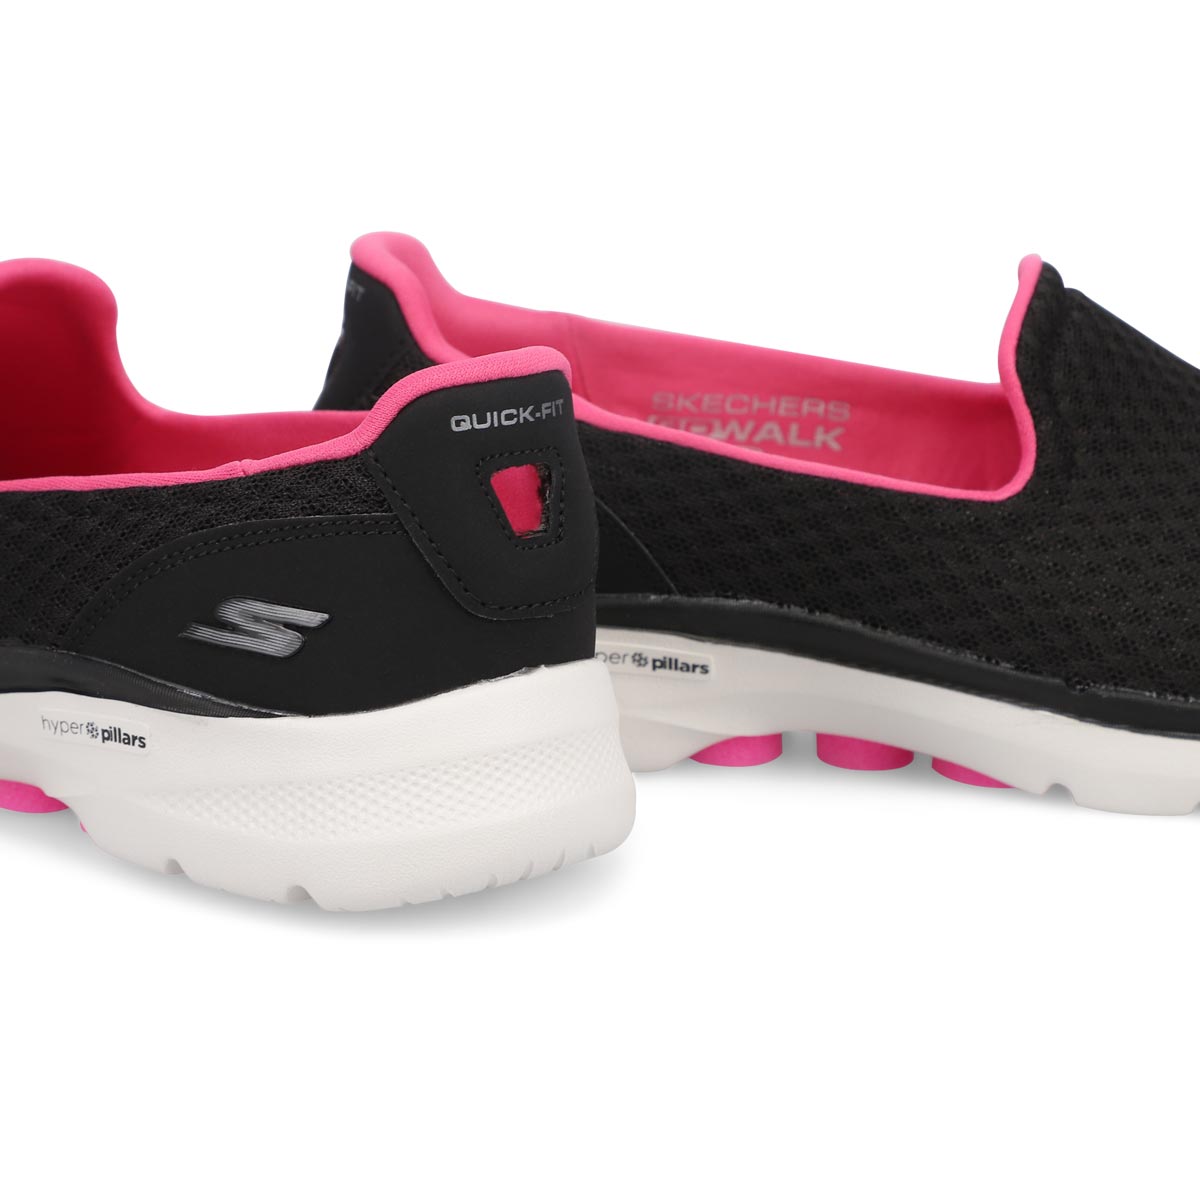 Women's Go Walk 6 Slip On Sneaker - Black/Pink